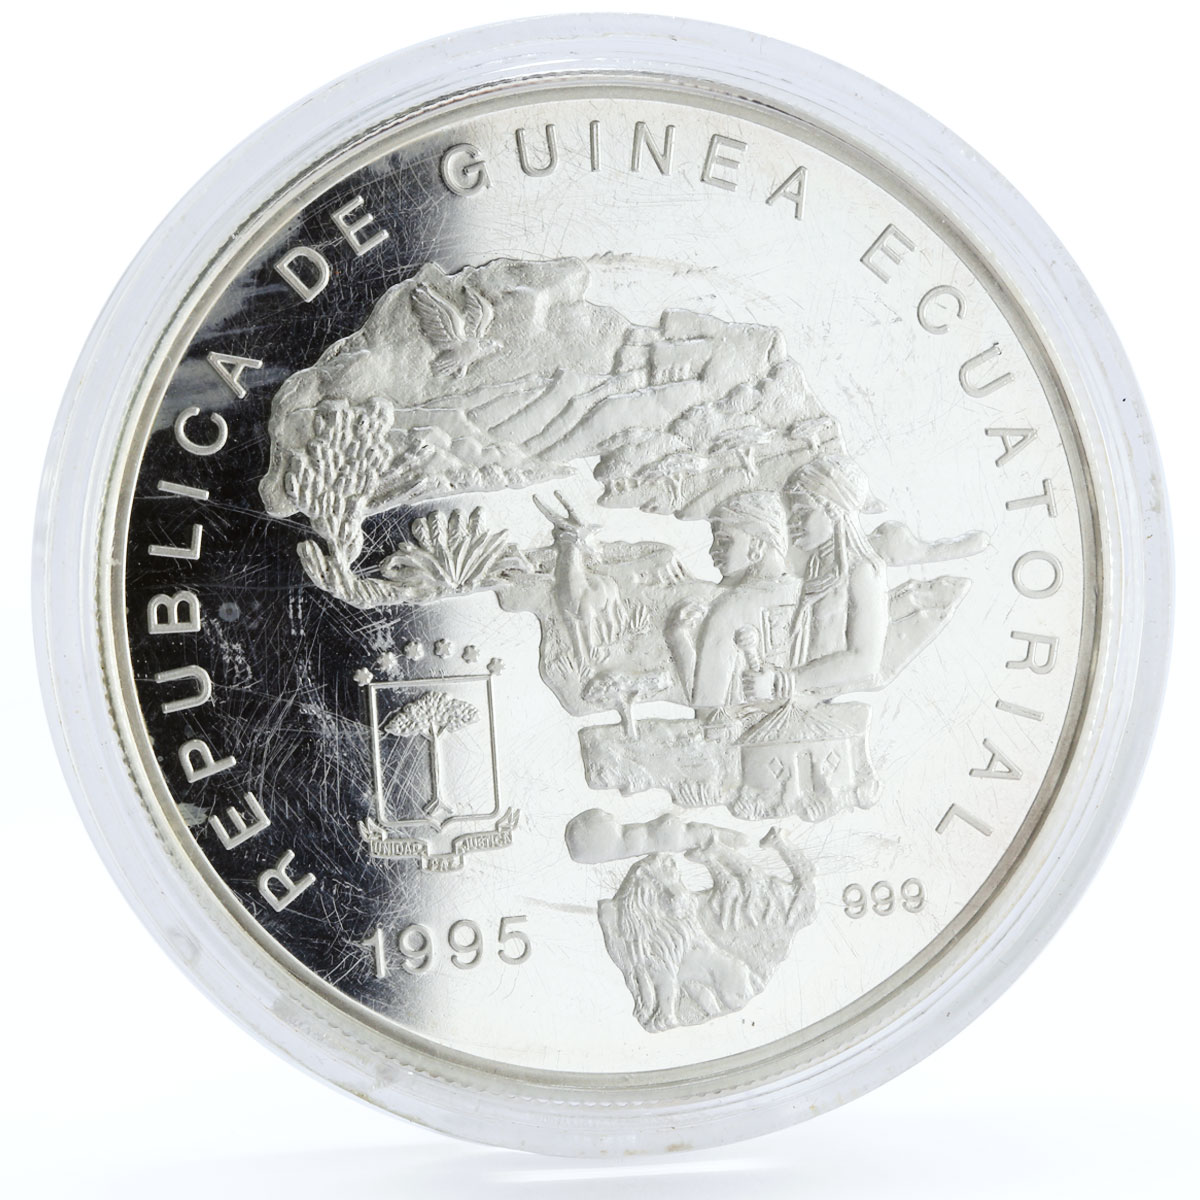 Equatorial Guinea 7000 francos Endangered Wildlife Elephants silver coin 1995